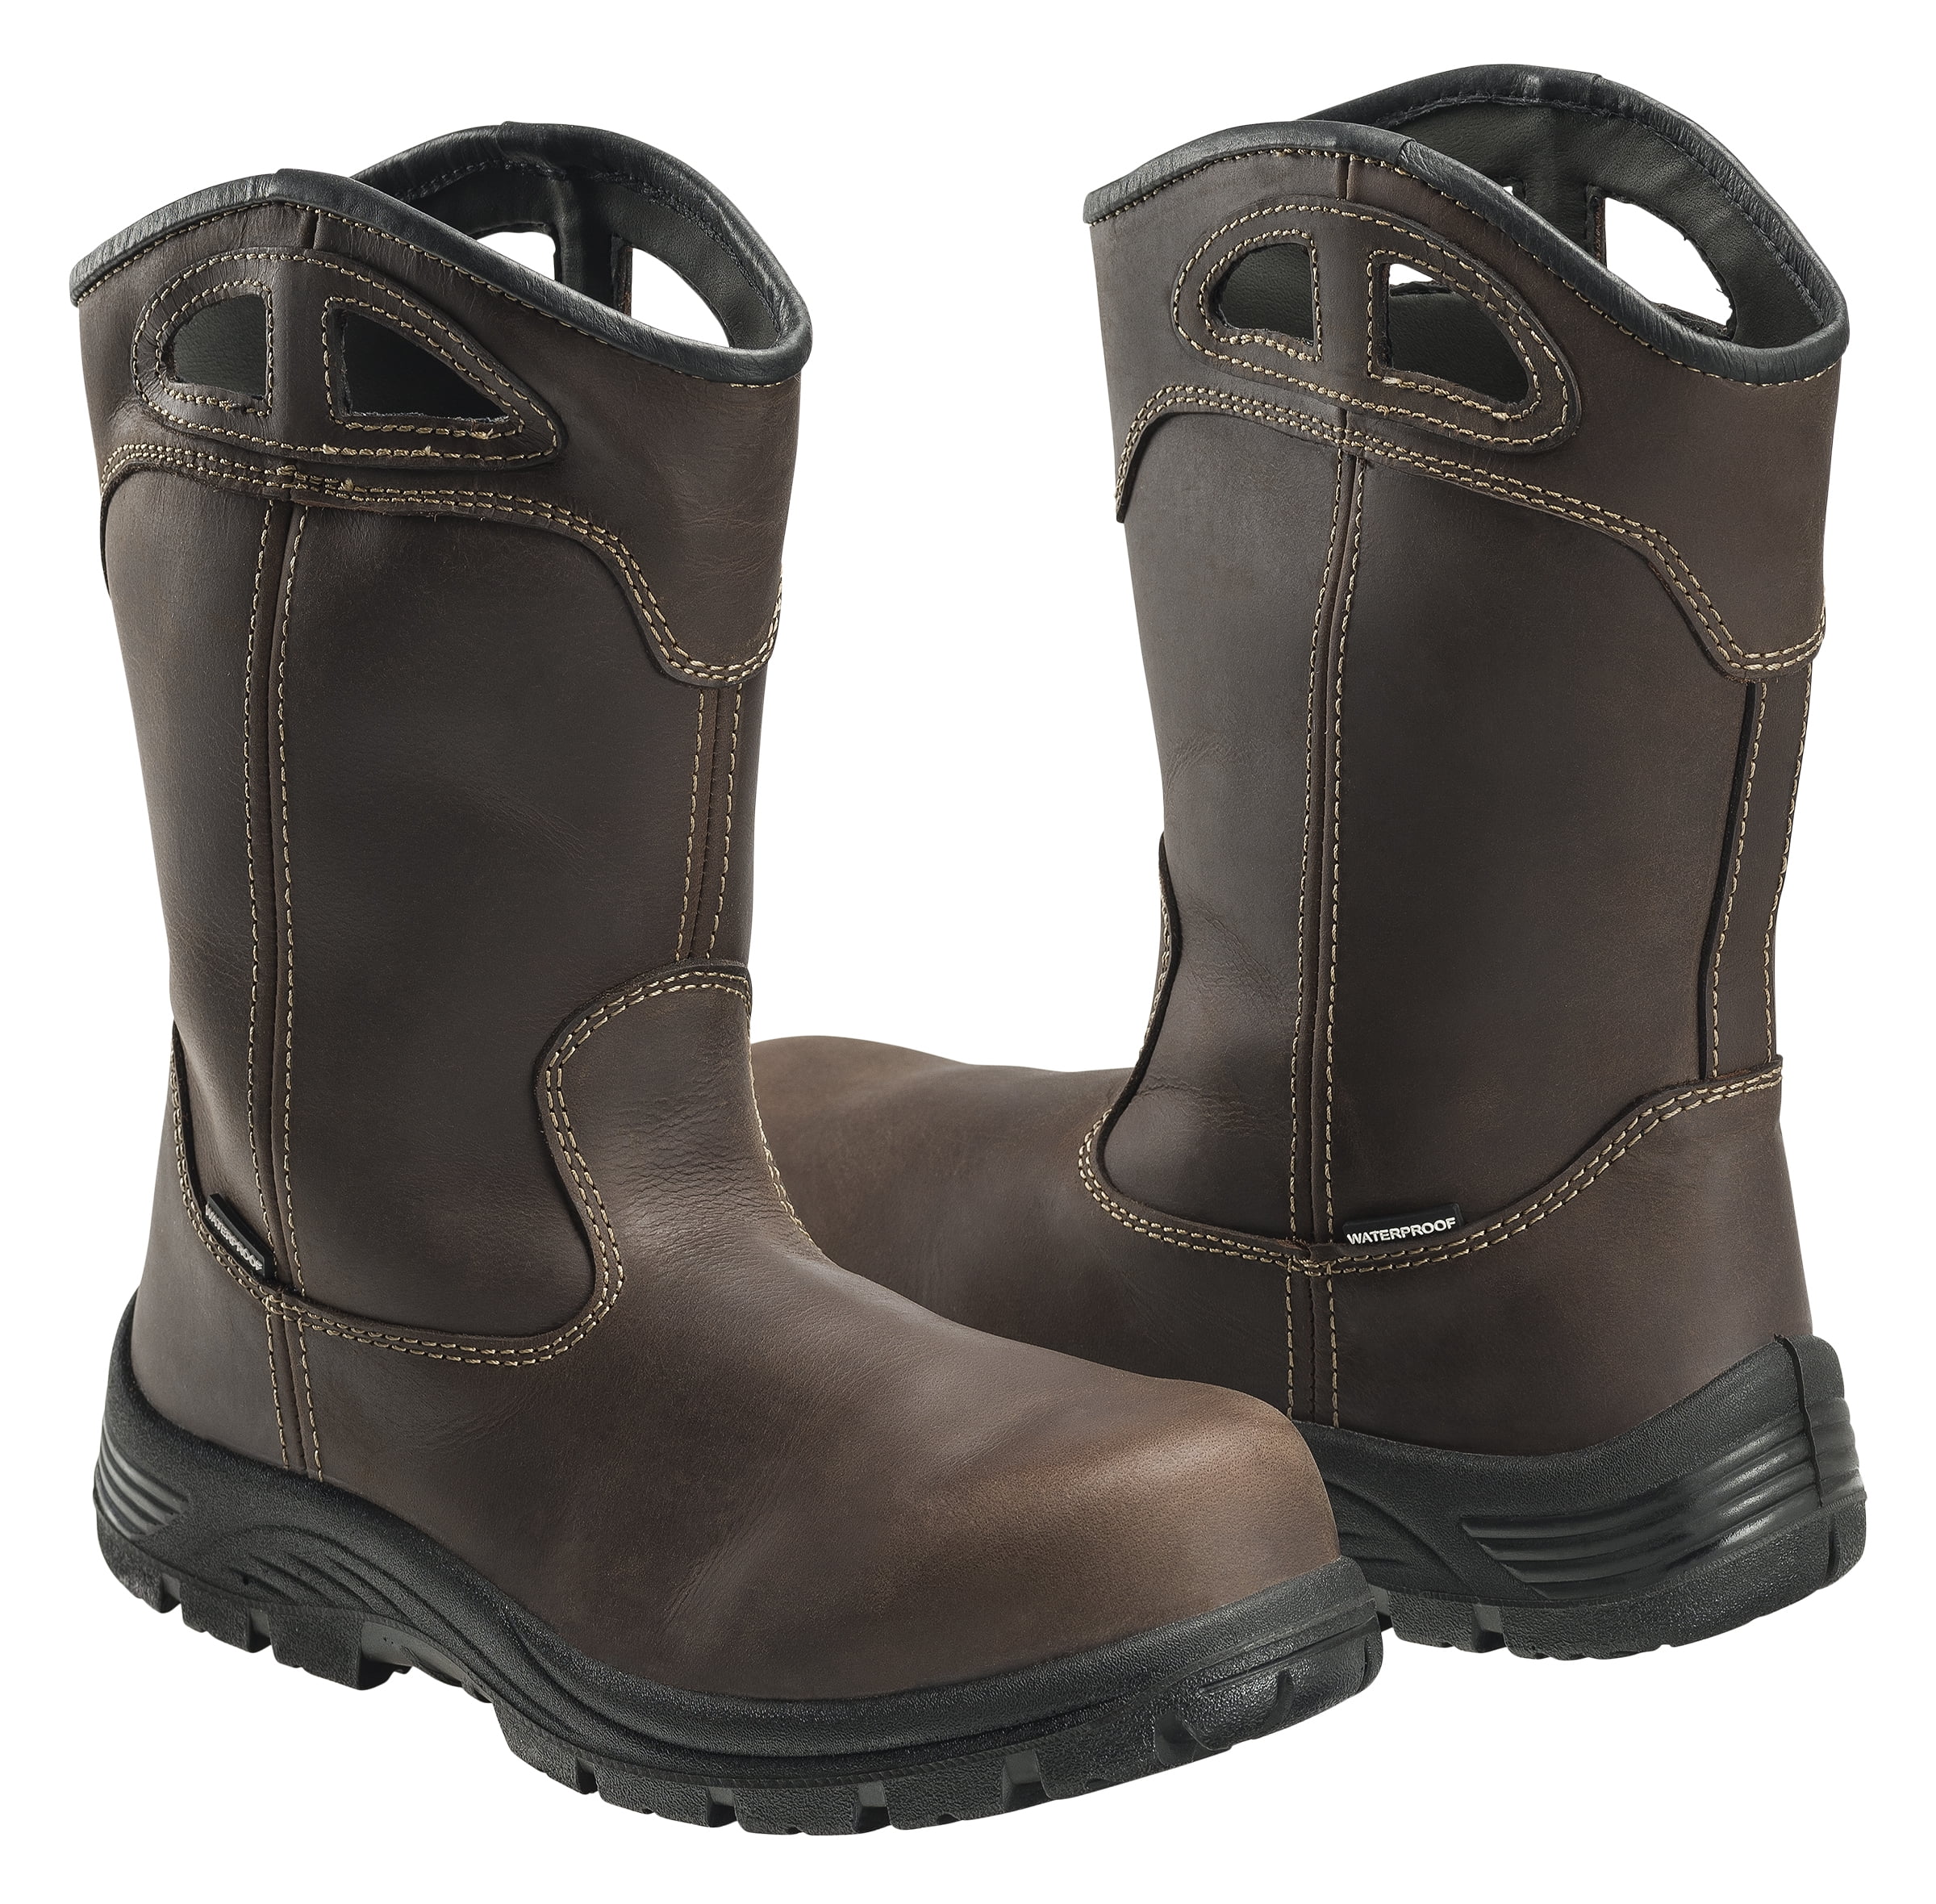 composite toe slip resistant boots